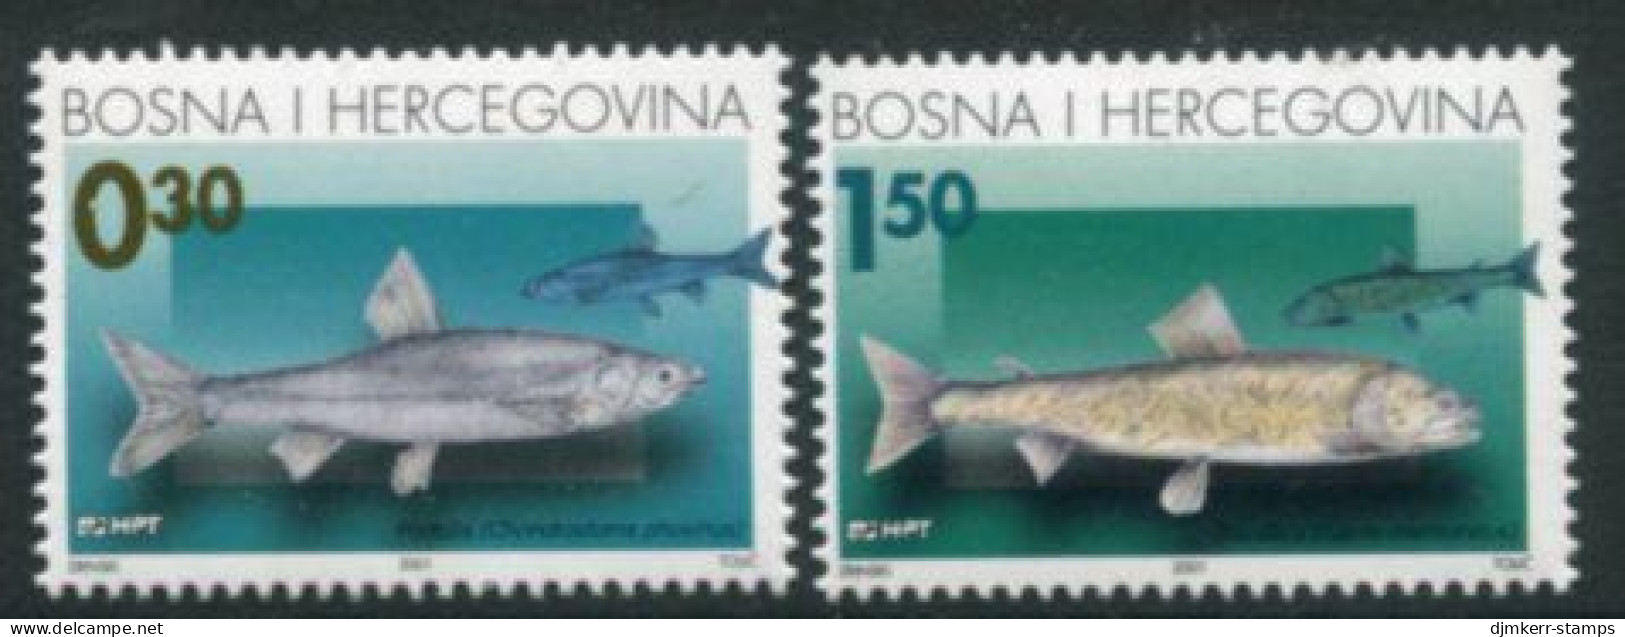 BOSNIA HERCEGOVINA (CROAT) 2001 Fish MNH / **.  Michel 68-69 - Bosnia Herzegovina